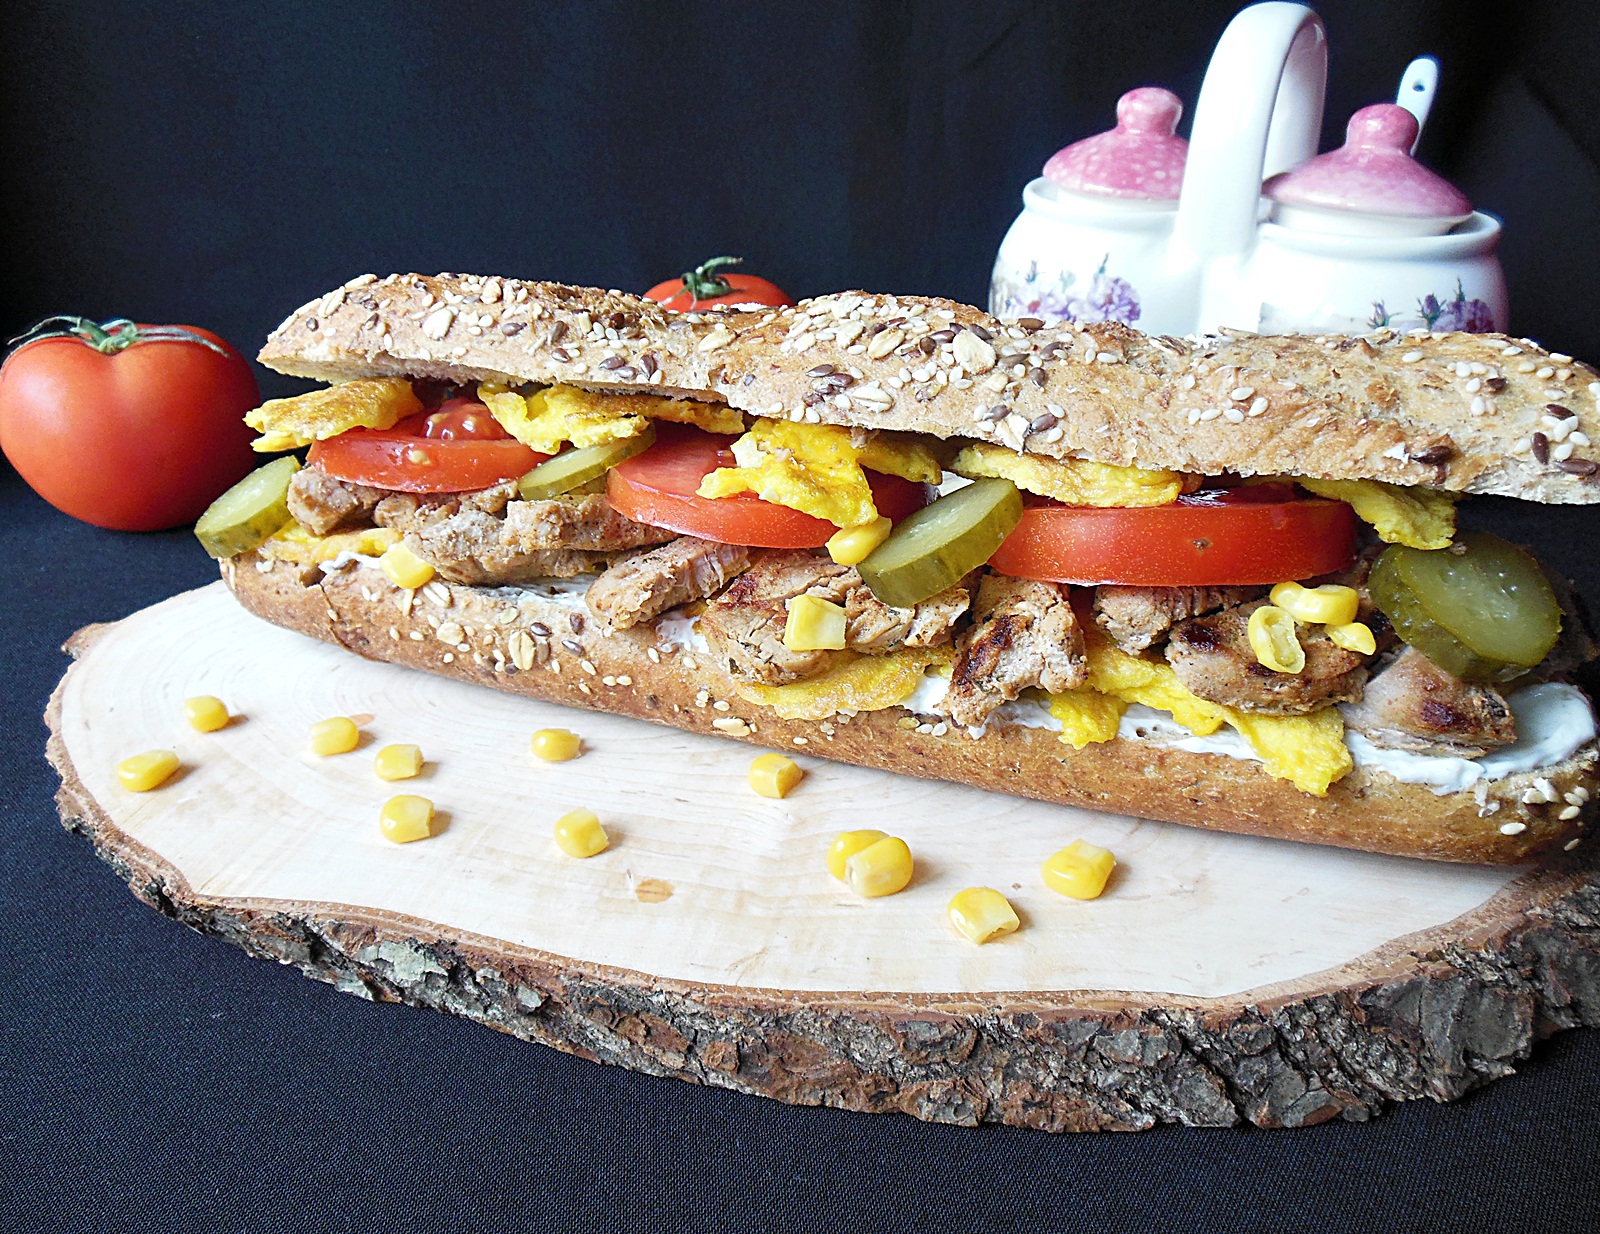 Sandwich cu omleta si muschiulet fraged de porc